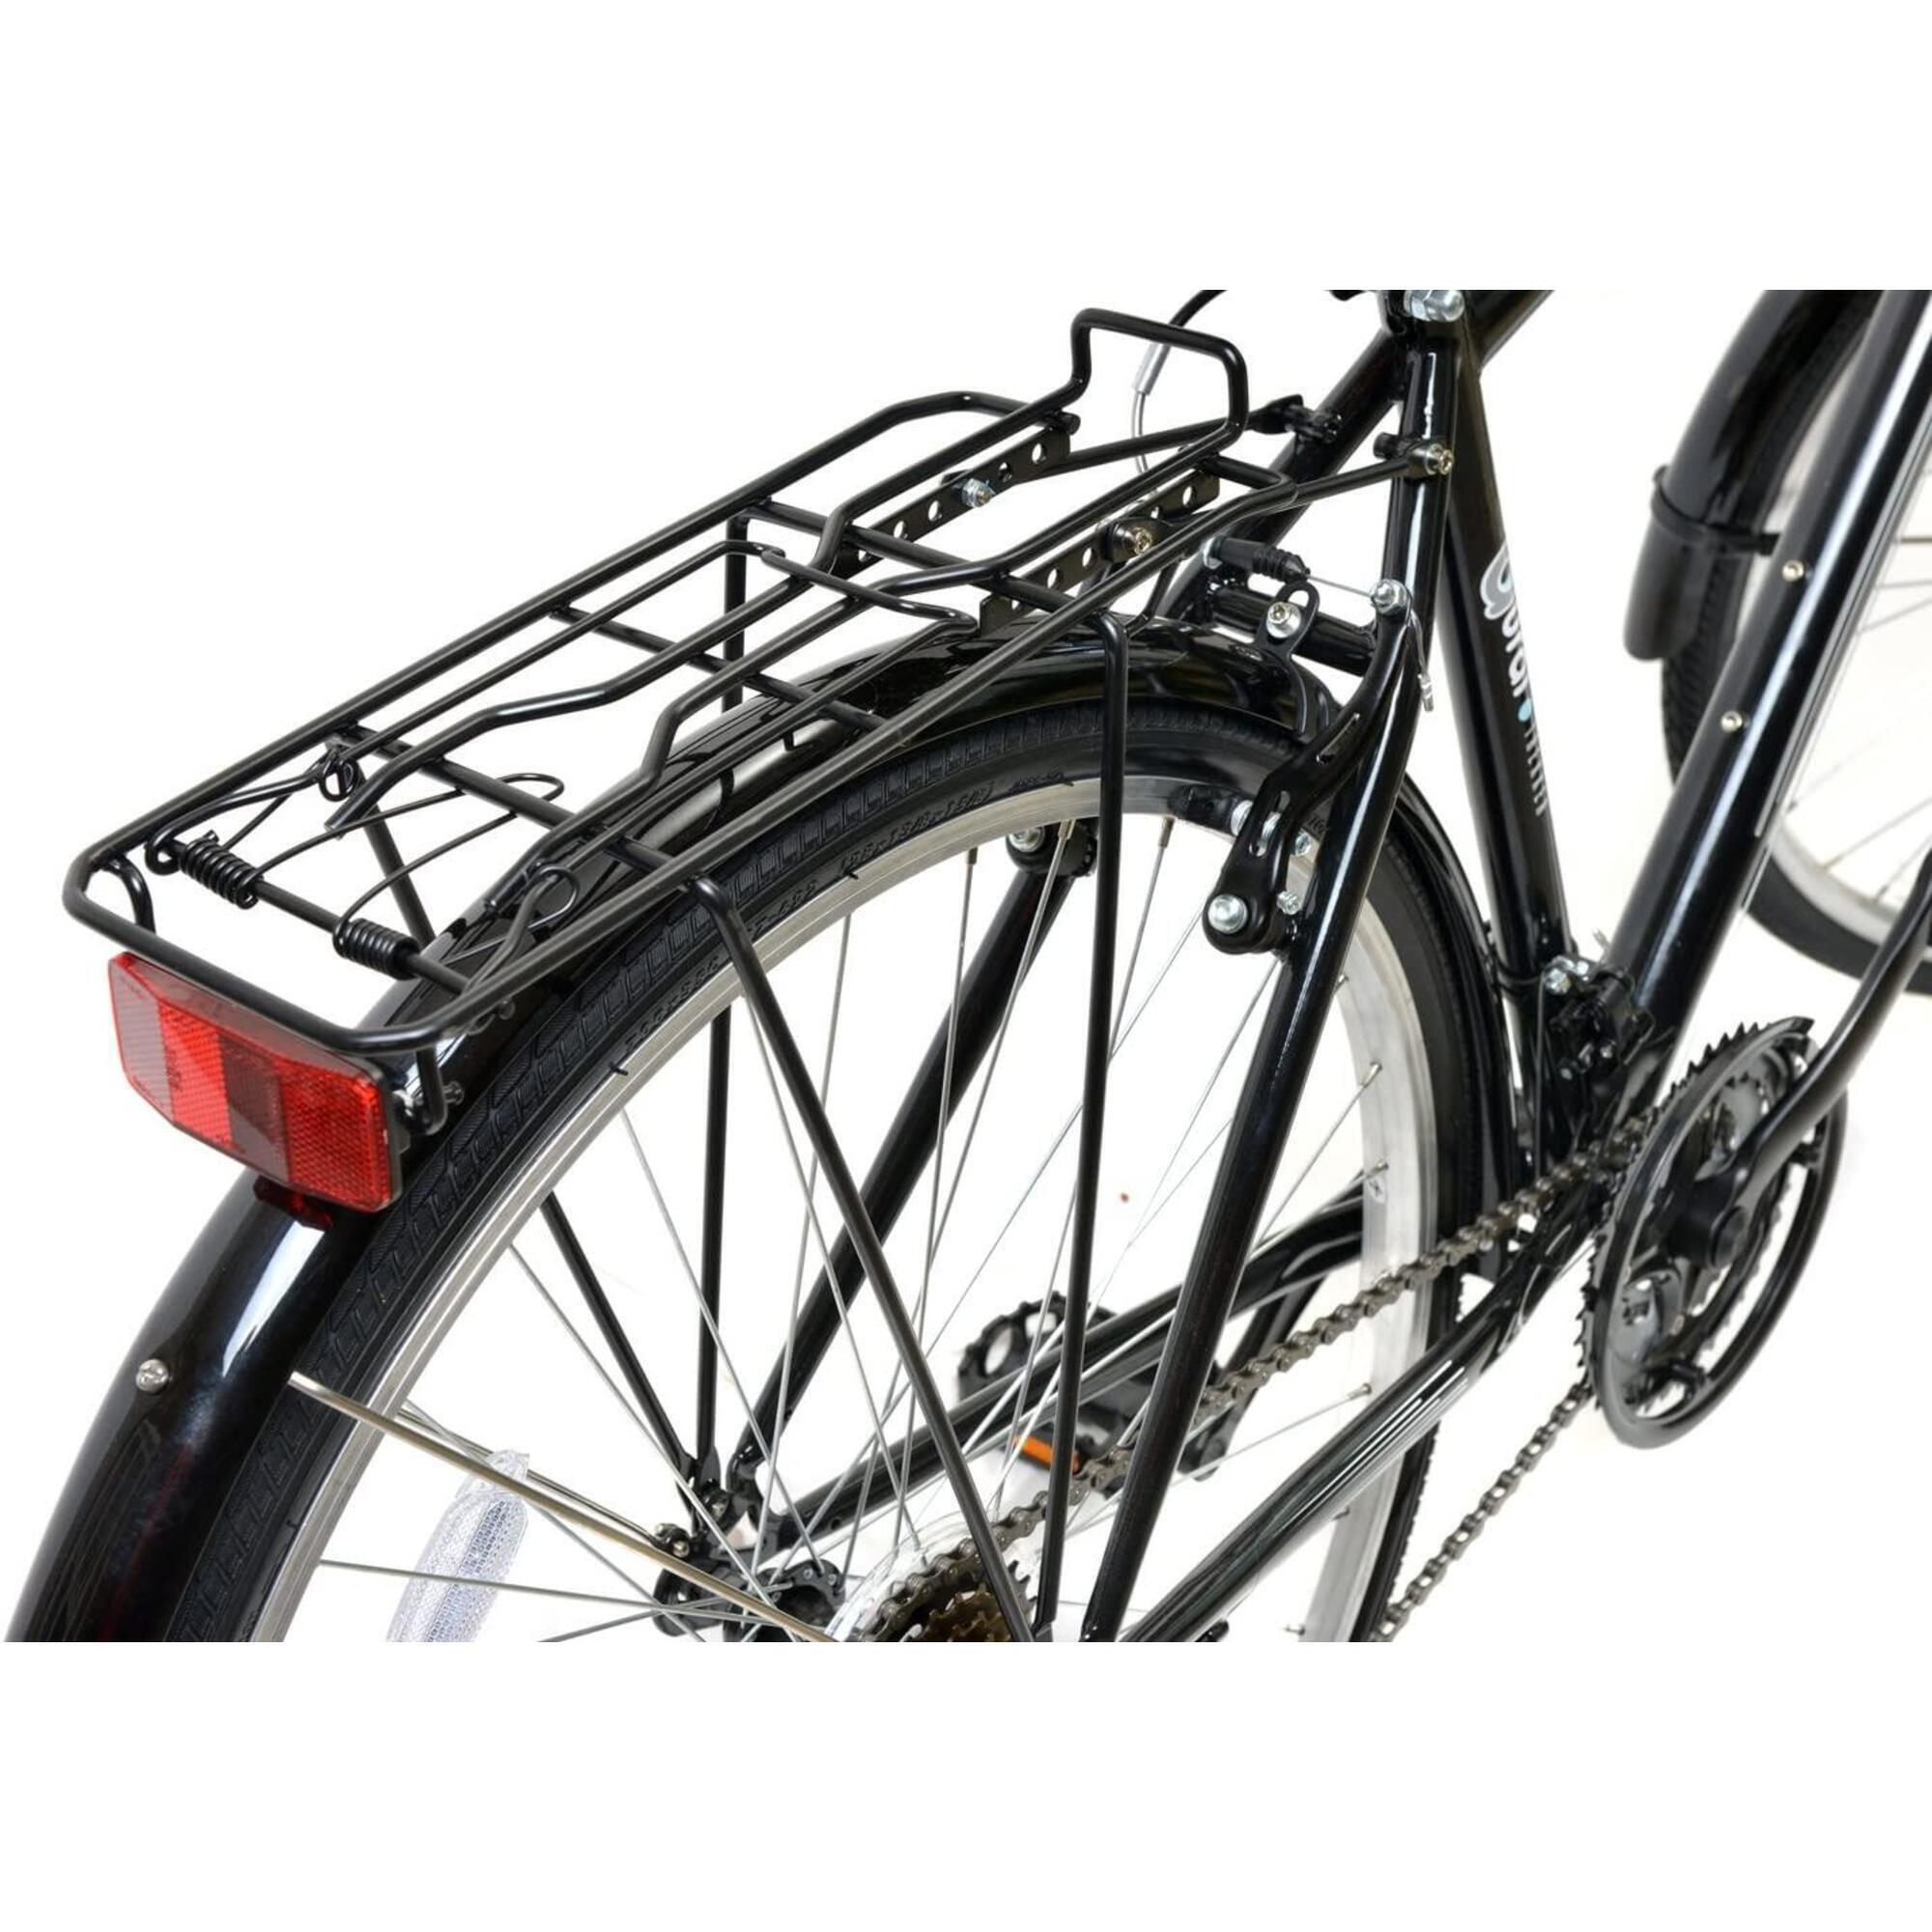 Aurai Trekker Crossbar Hybrid Bicycle, 700c Wheel, 18 Speed - Black 5/5